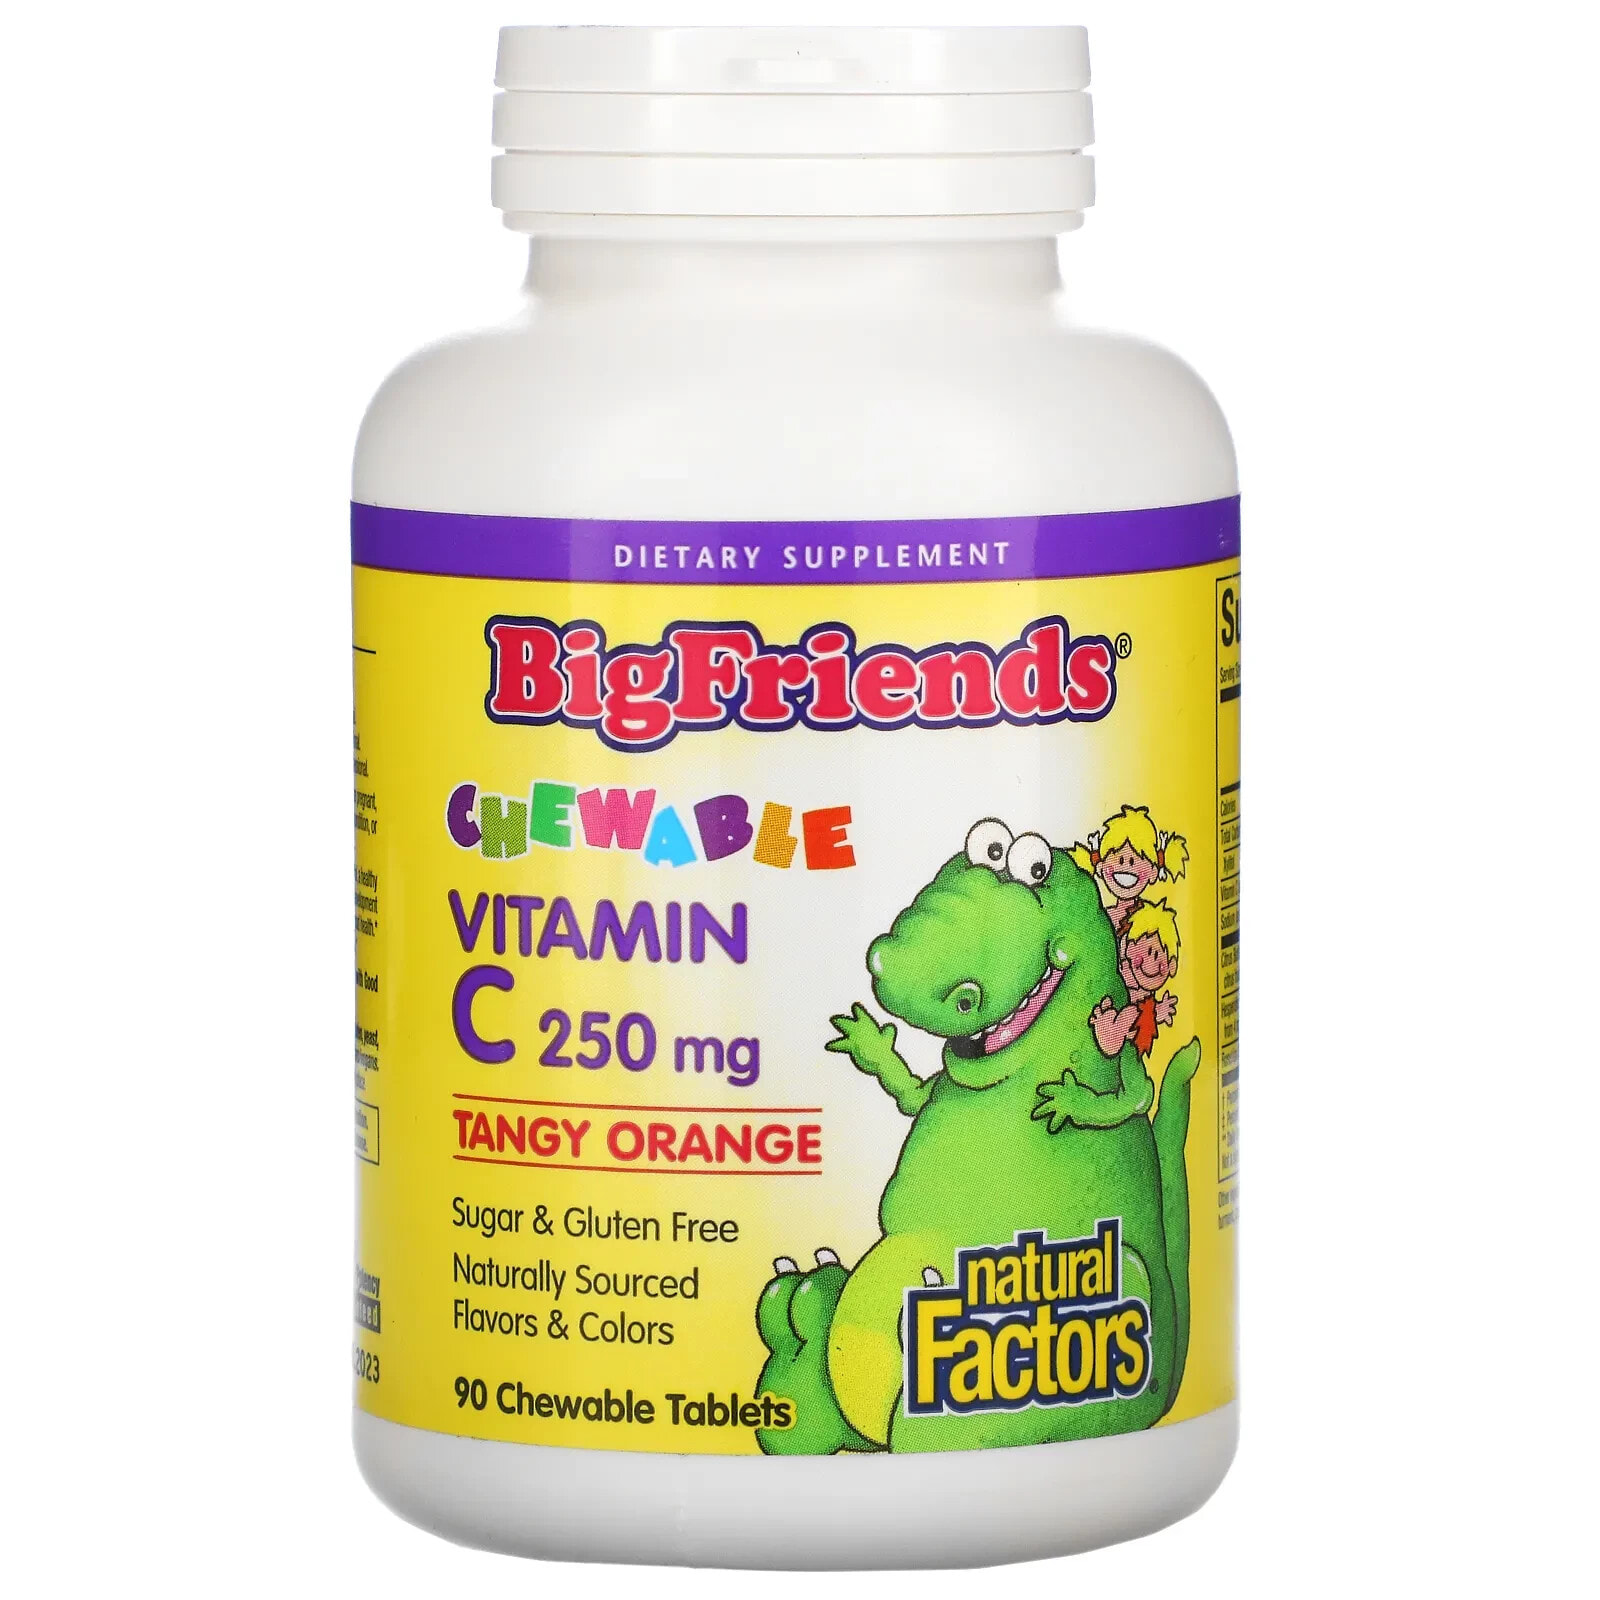 Chewable vitamin. Natural Factors big friends Chewable Vitamin d3. Натурал ФАКТОРС витамин. Витамины натурал ФАКТОРС для детей Биг. Детские жевательные витамины.